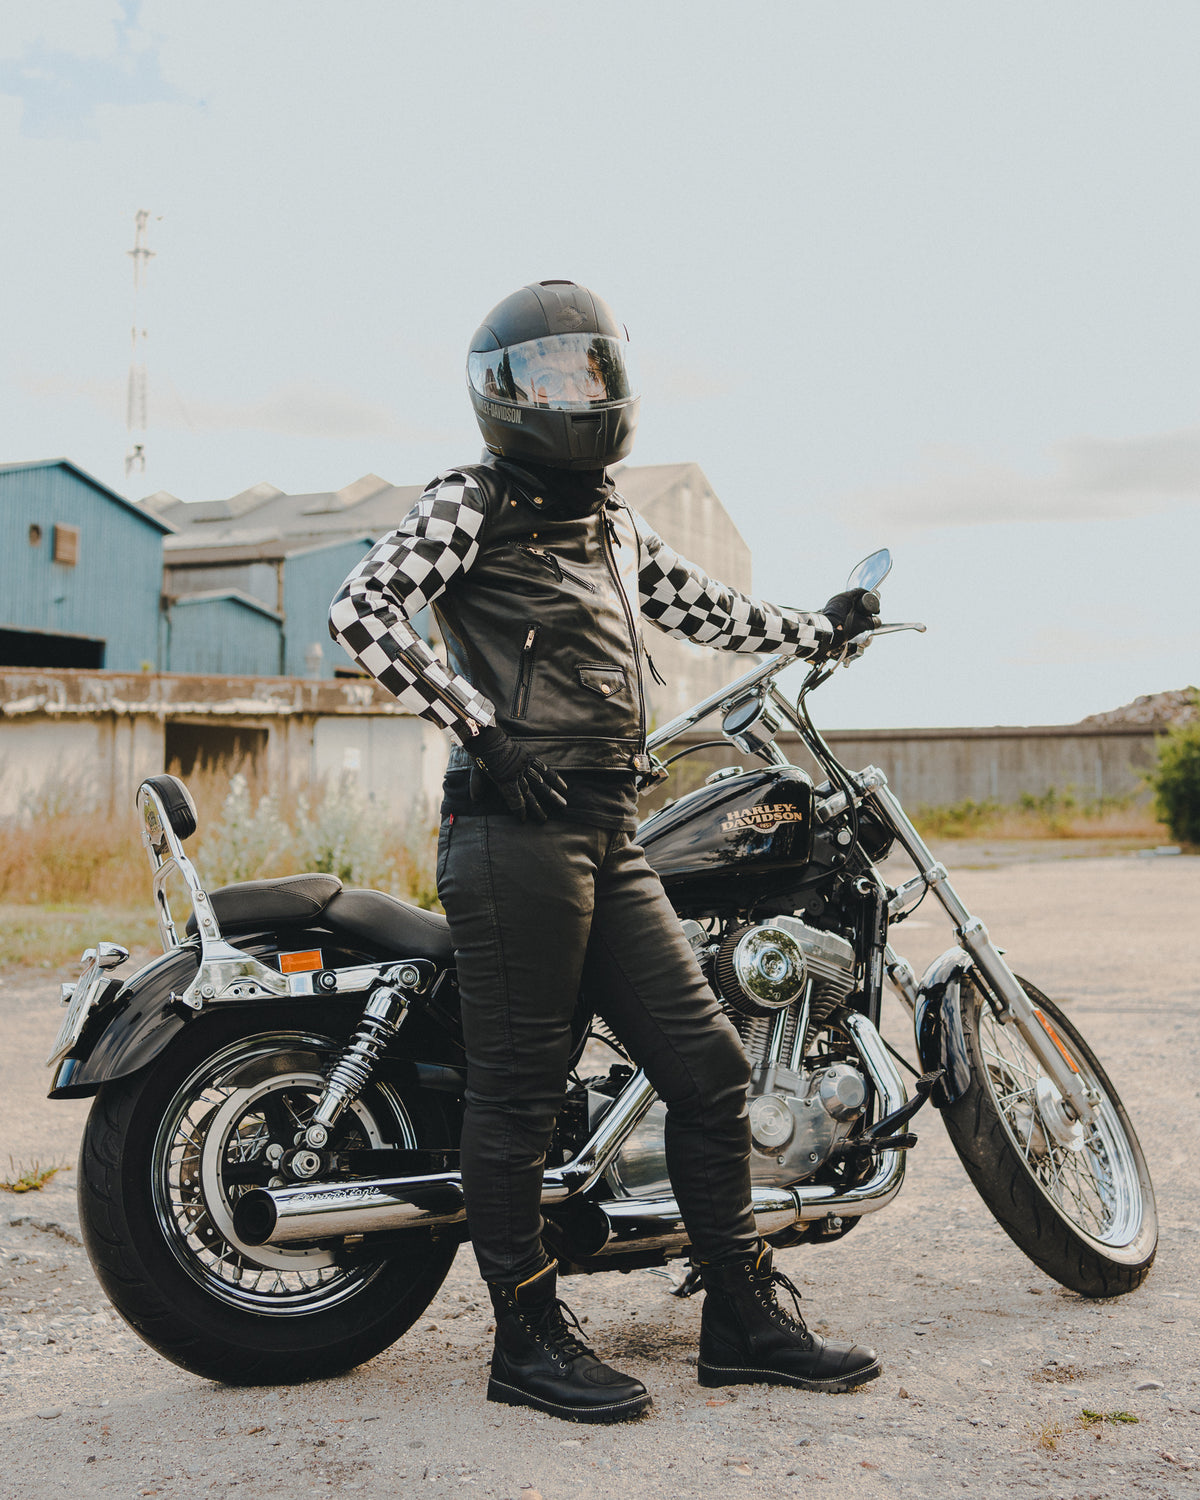 MotoGirl Motorcycle Riding Gear